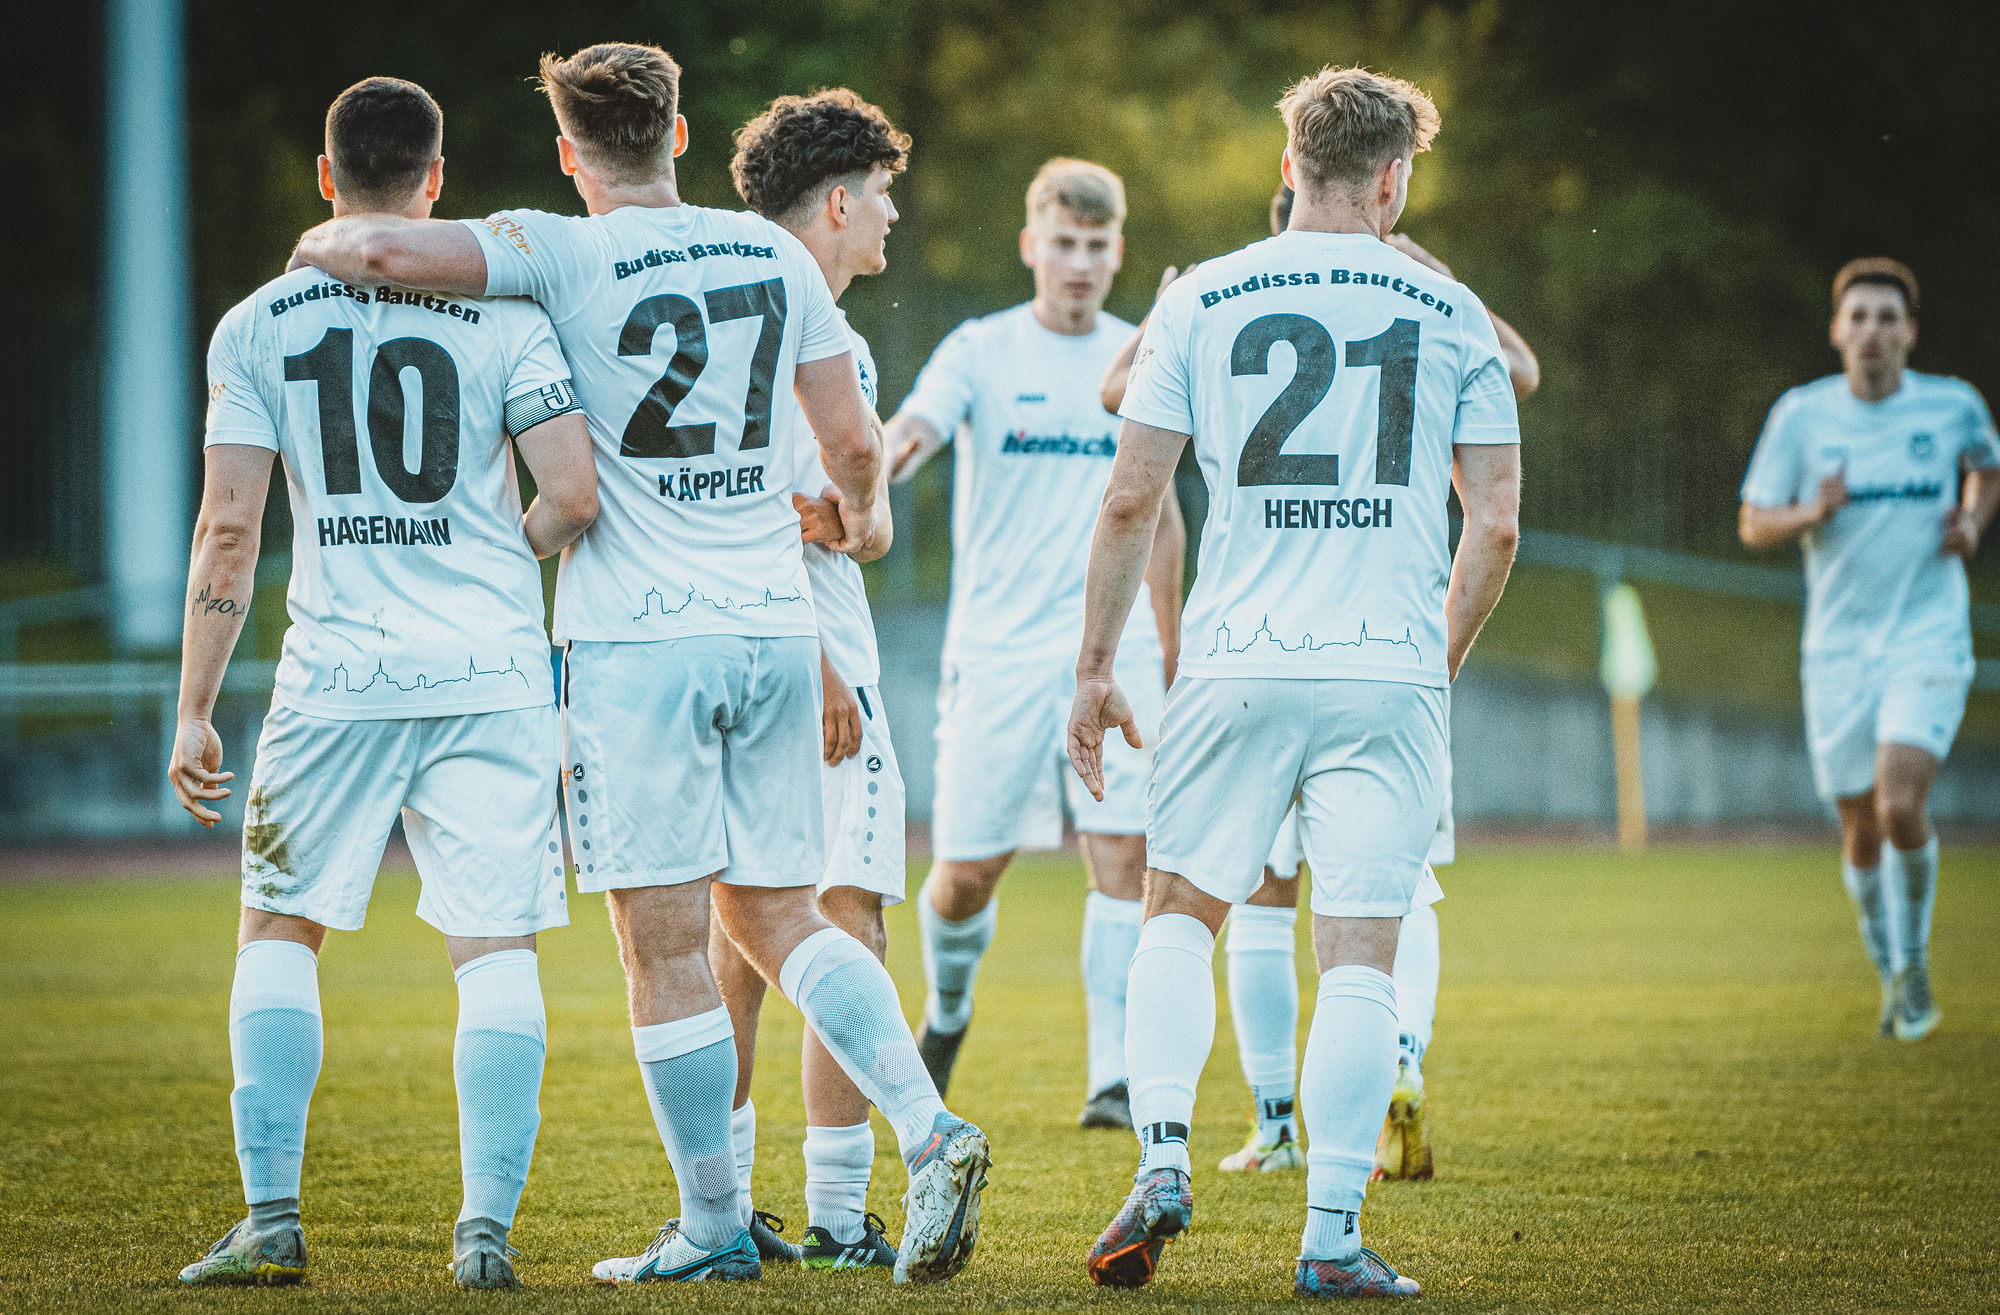 Budissa testet gegen Dynamo - Landkreis Bautzen